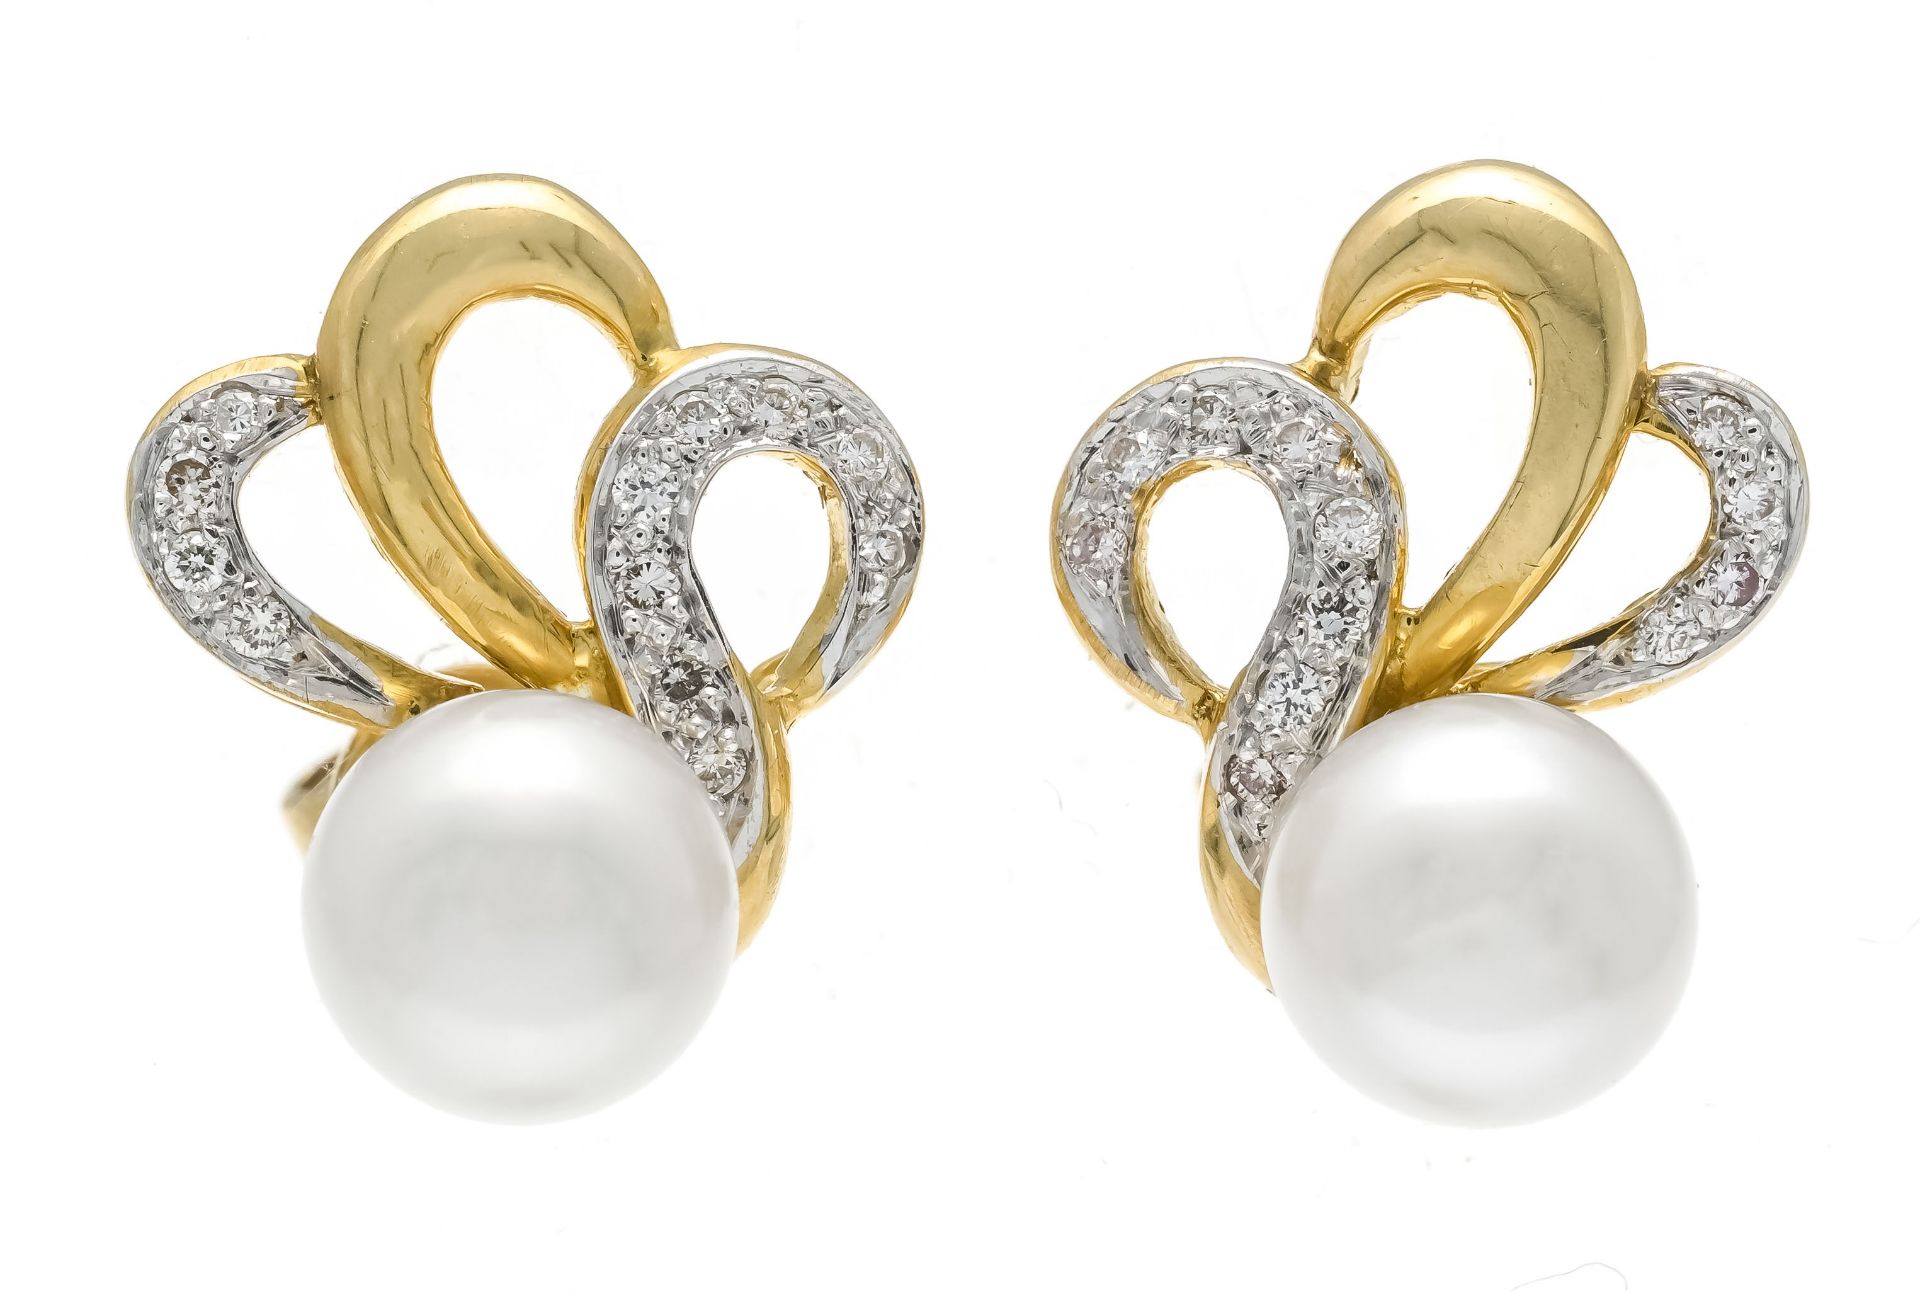 Akoya pearl stud earrings GG/WG 750/000 with 2 white Akoya pearls 7.2 mm and 24 brilliant-cut